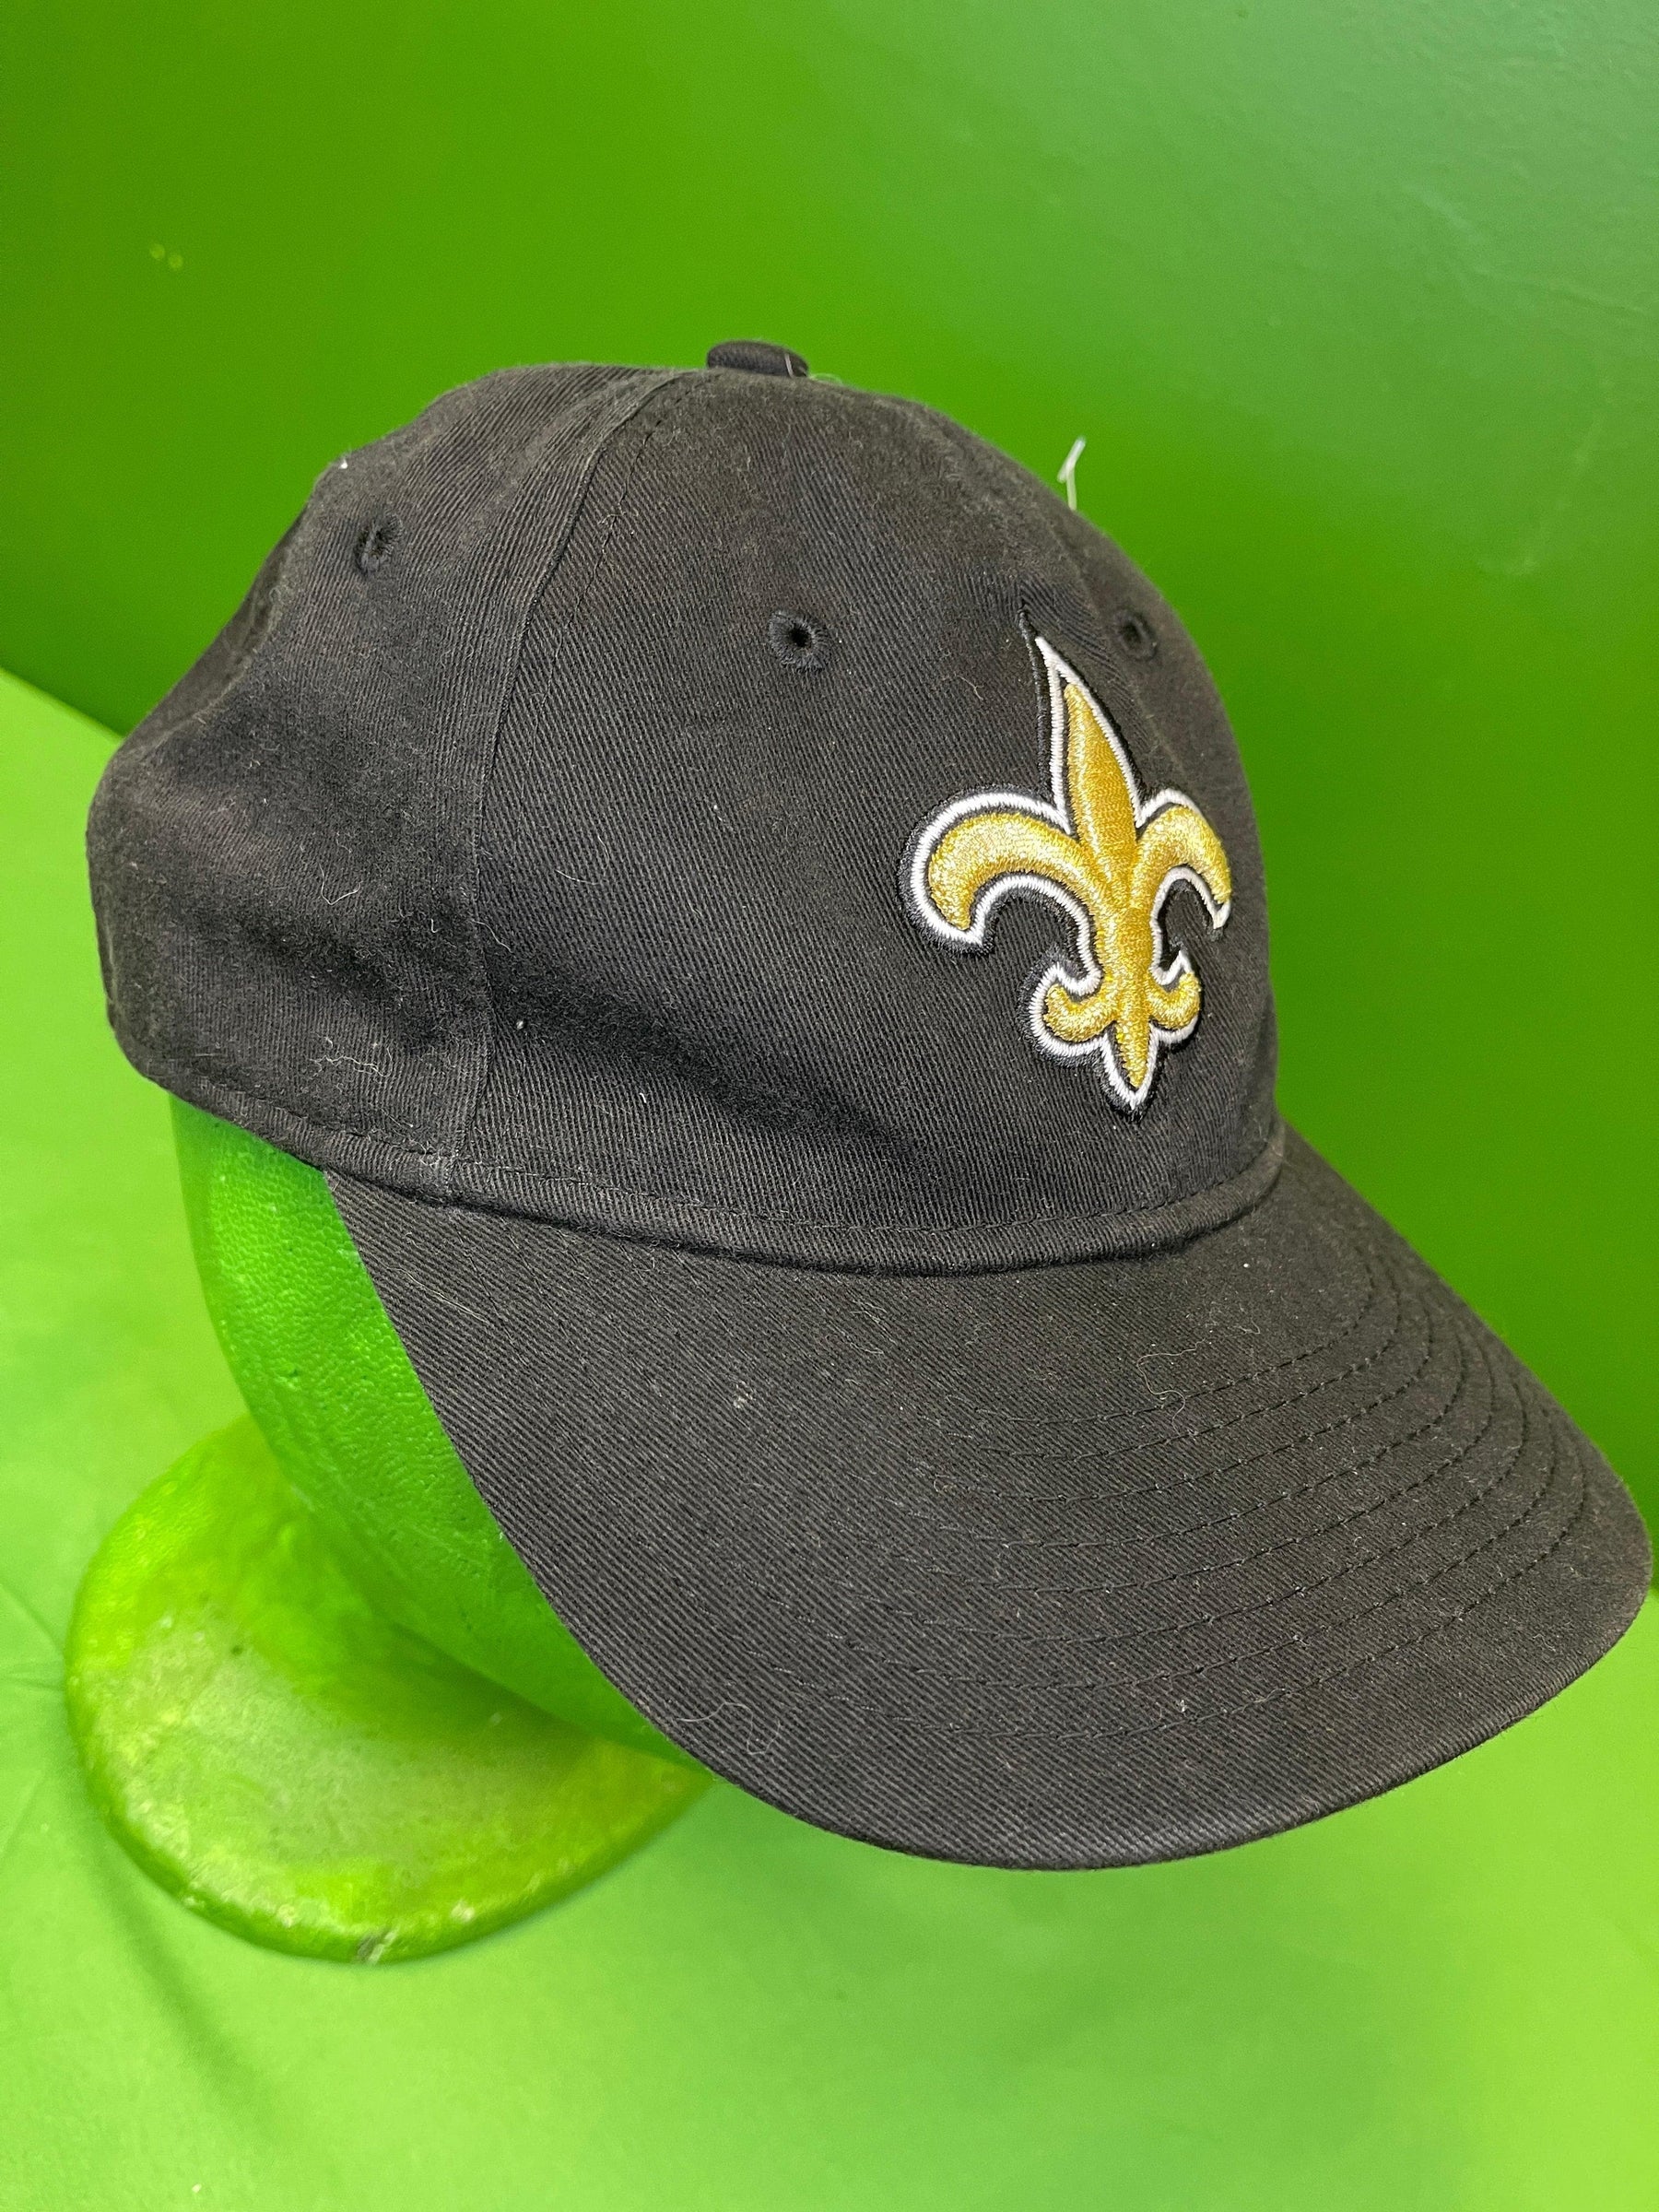 NFL New Orleans Saints New Era 9TWENTY Baseball Hat/Cap Youth OSFA NWT